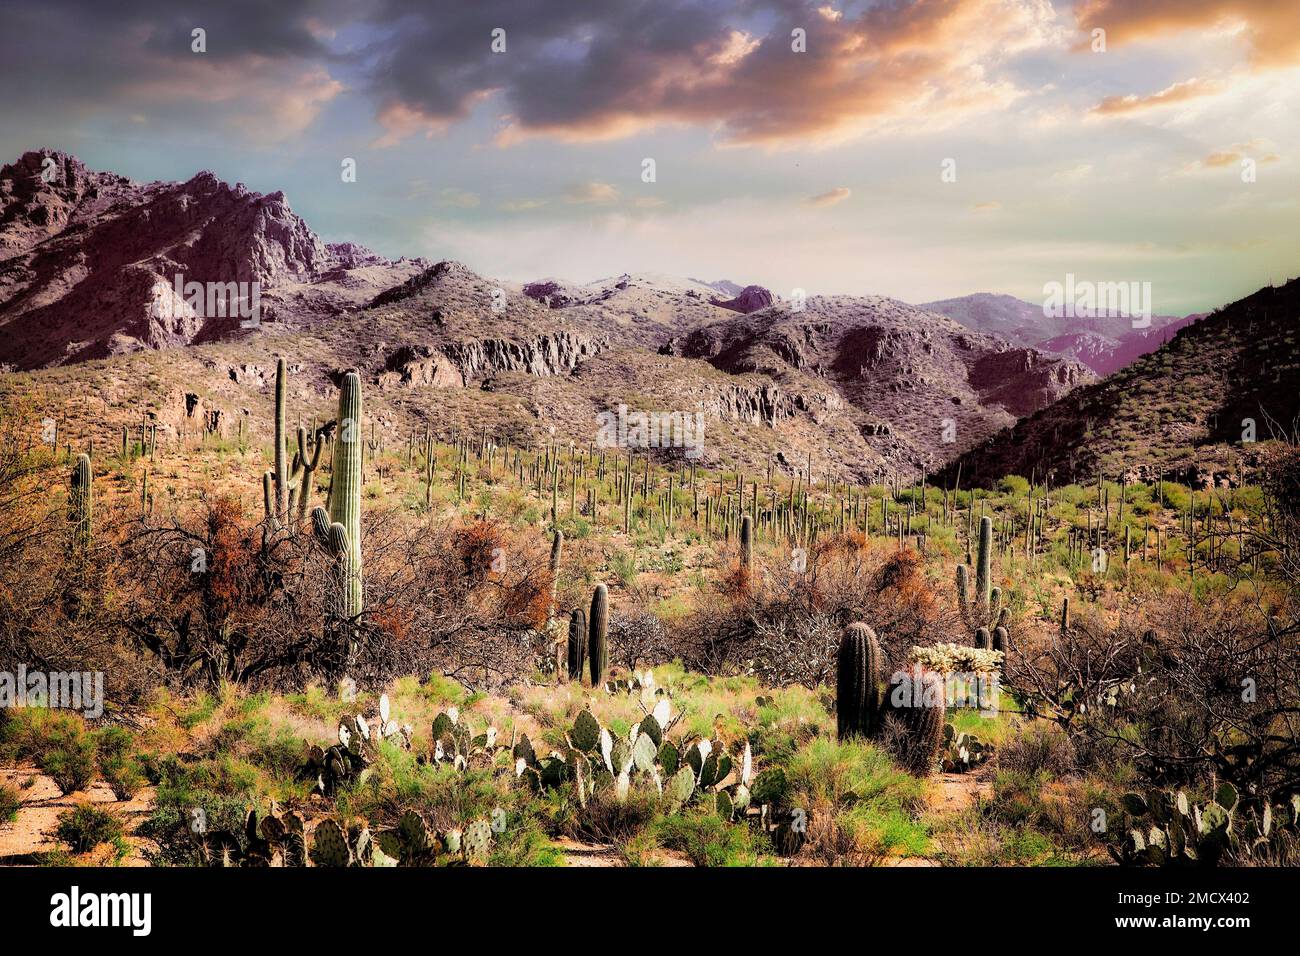 Die hohen Sonoran Wüste am Sabino Canyon, Tucson, Arizona. Stockfoto